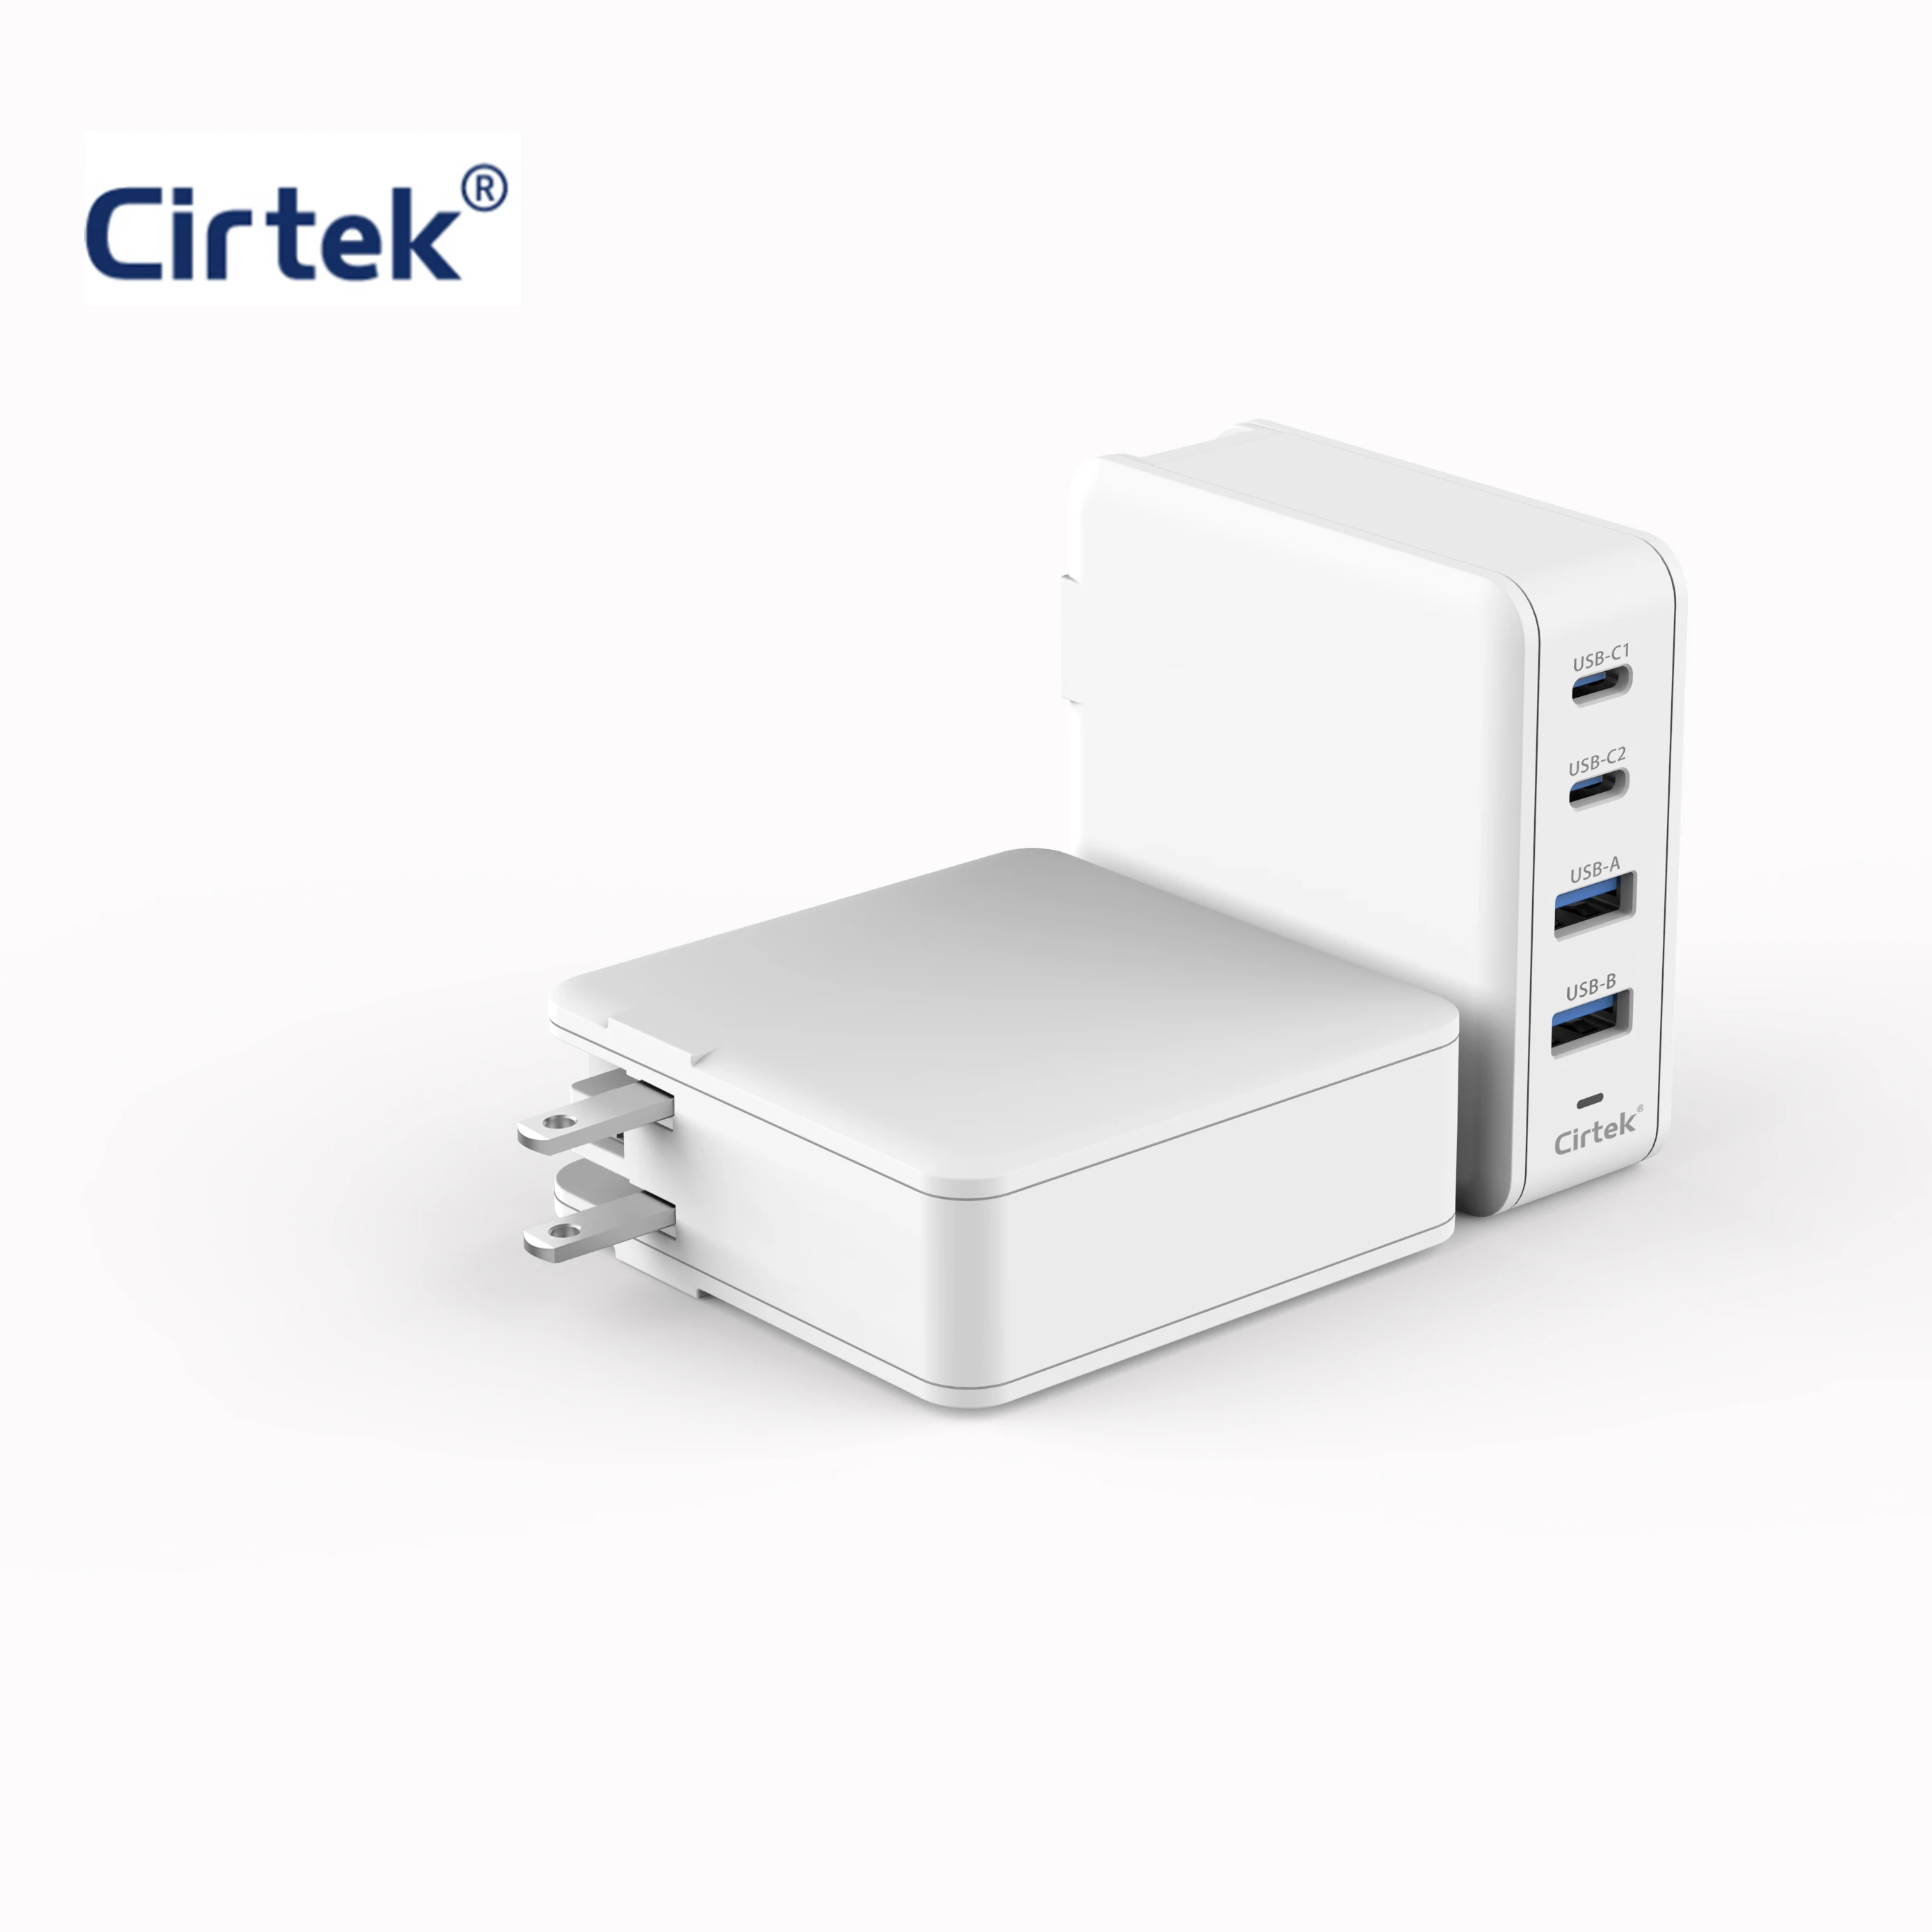 

Cirtek GaN PD 4-port usb adaptive fast charging us wall charger adapter QC3.0 convenient phone 100W charger wall plug, White